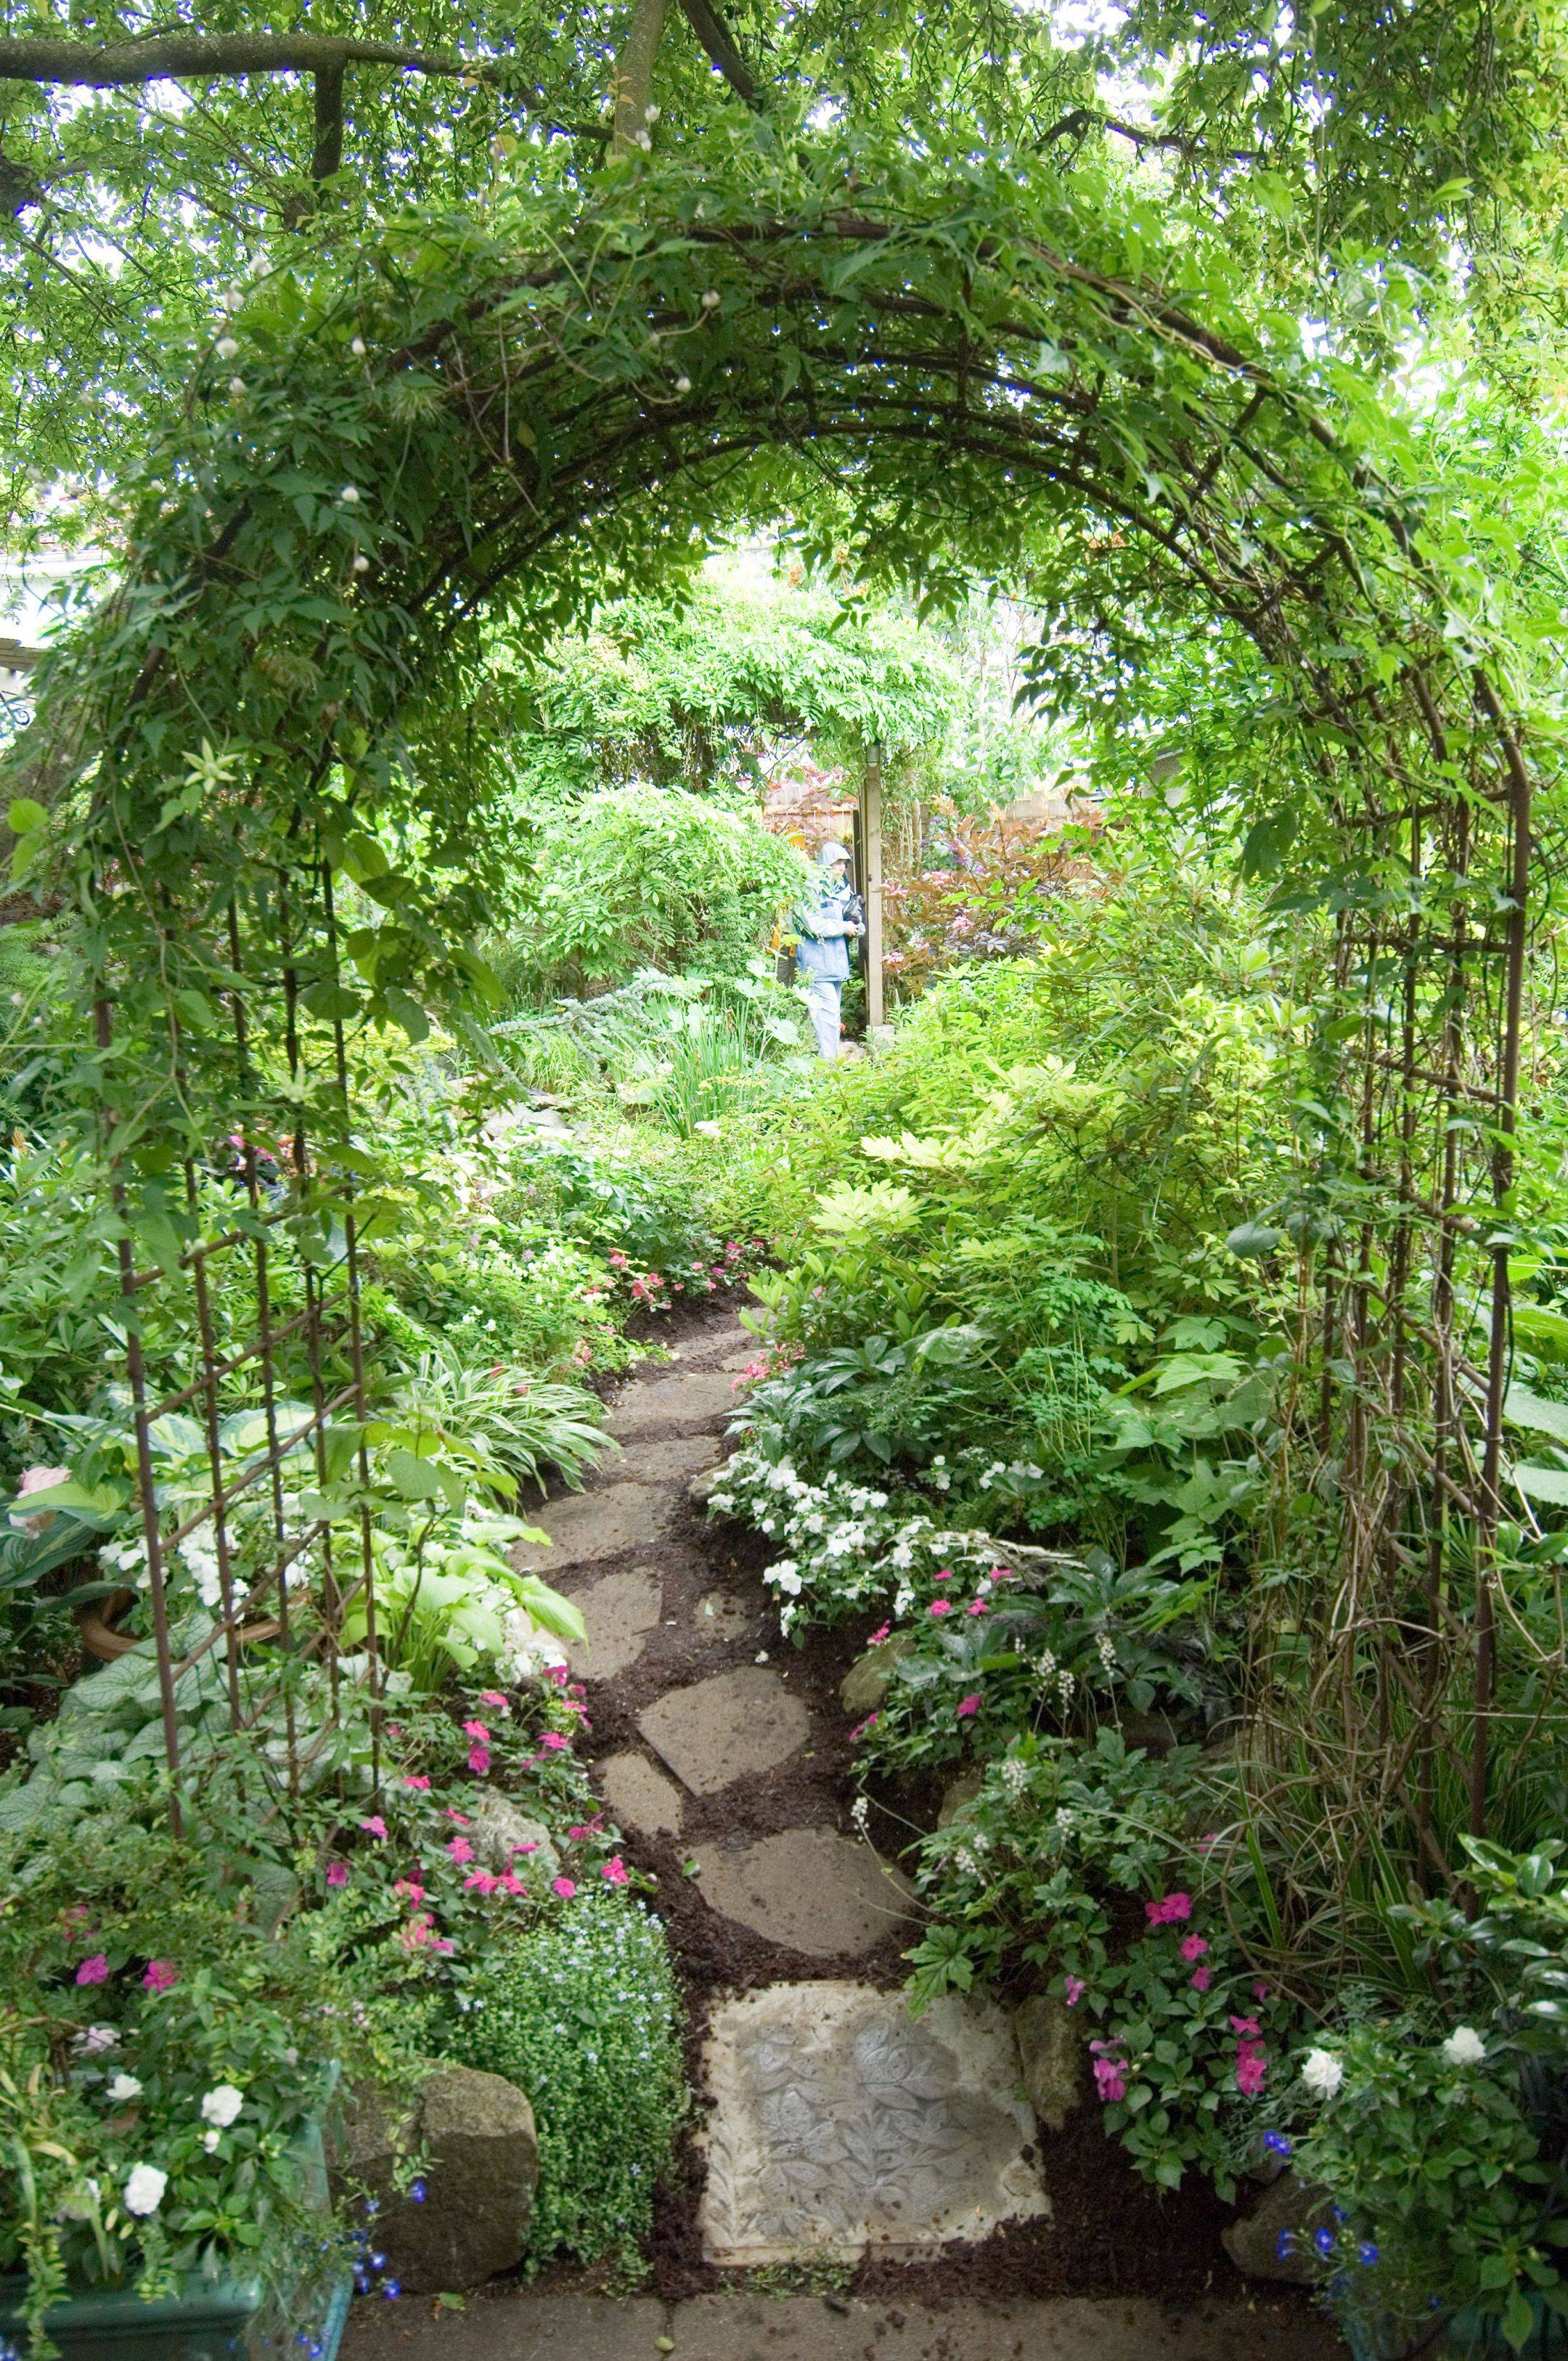 Awesome Secret Garden Design Ideas